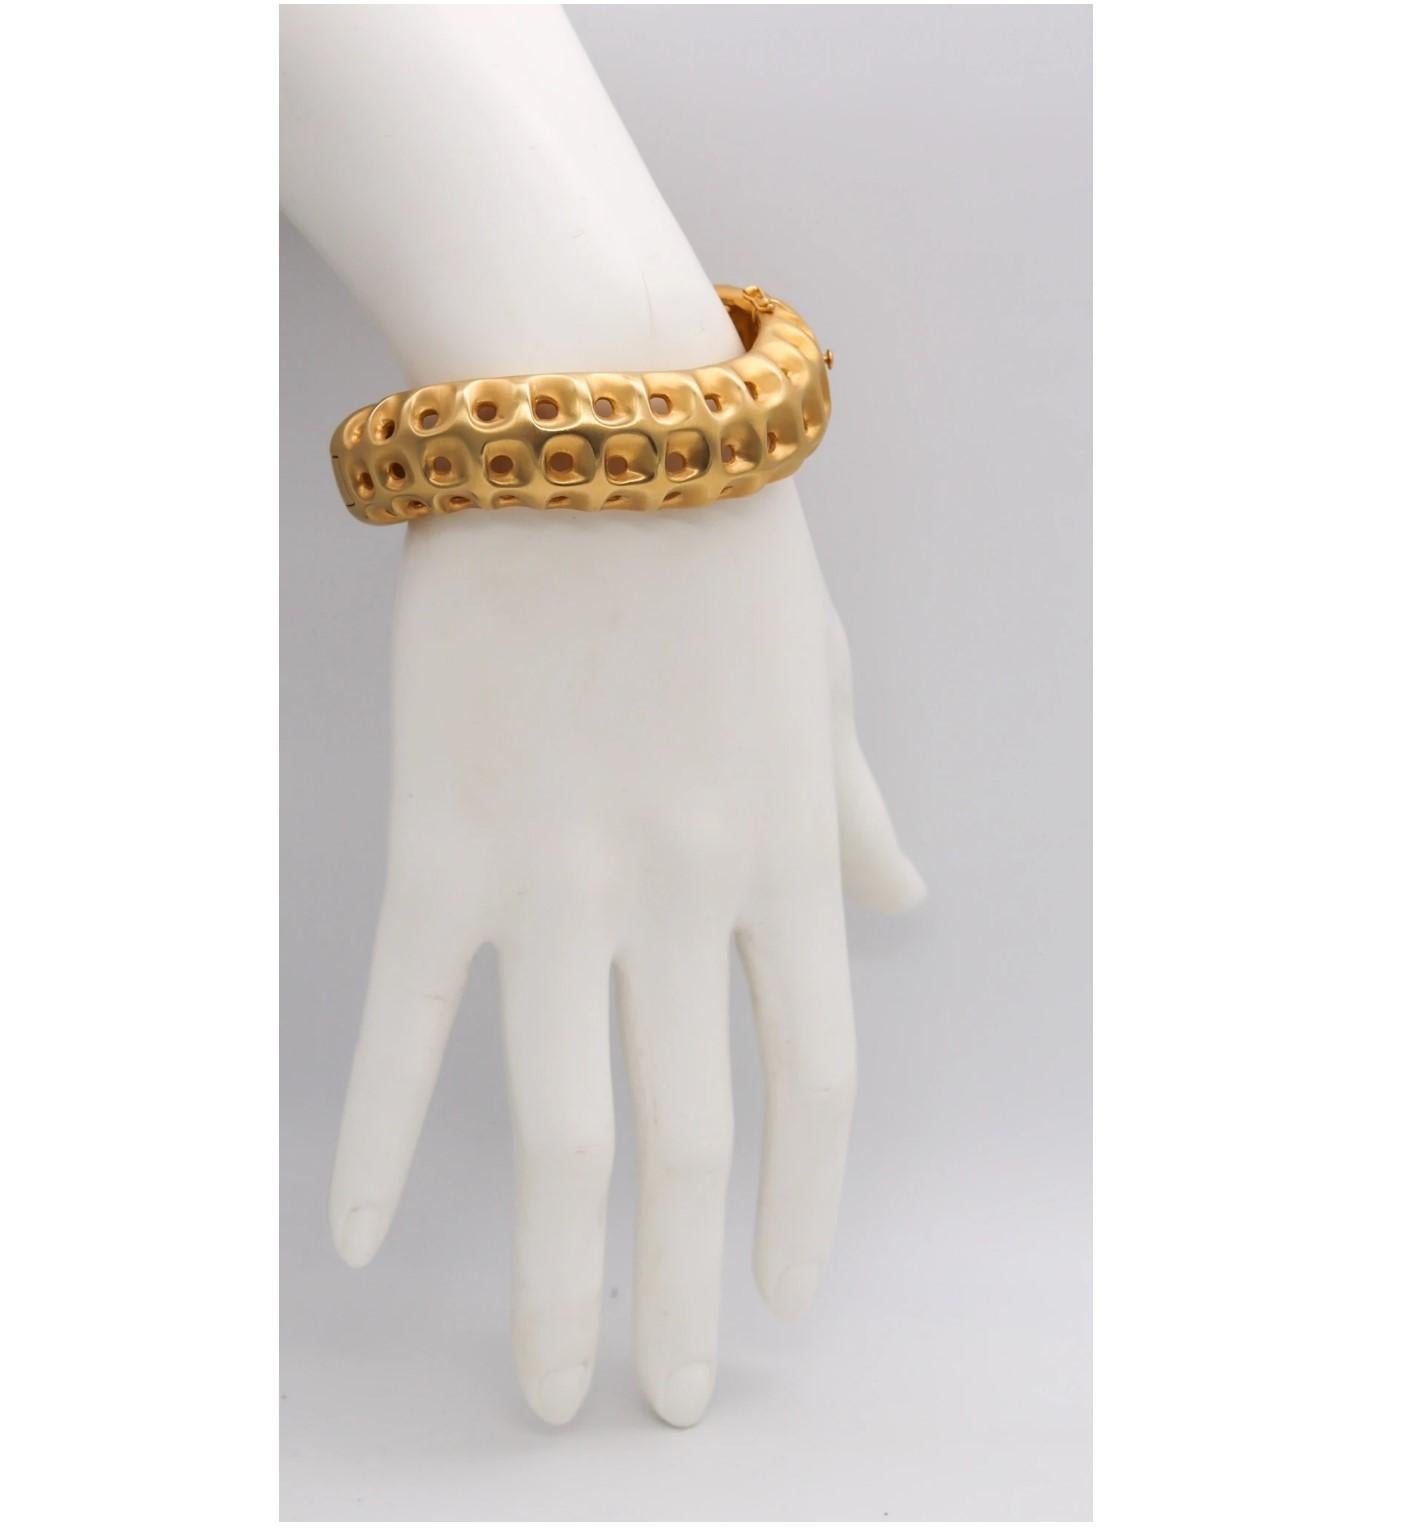 Angela Cummings Studios 1987 New York Rare Honeycombs Bracelet Solid 18Kt Gold For Sale 4